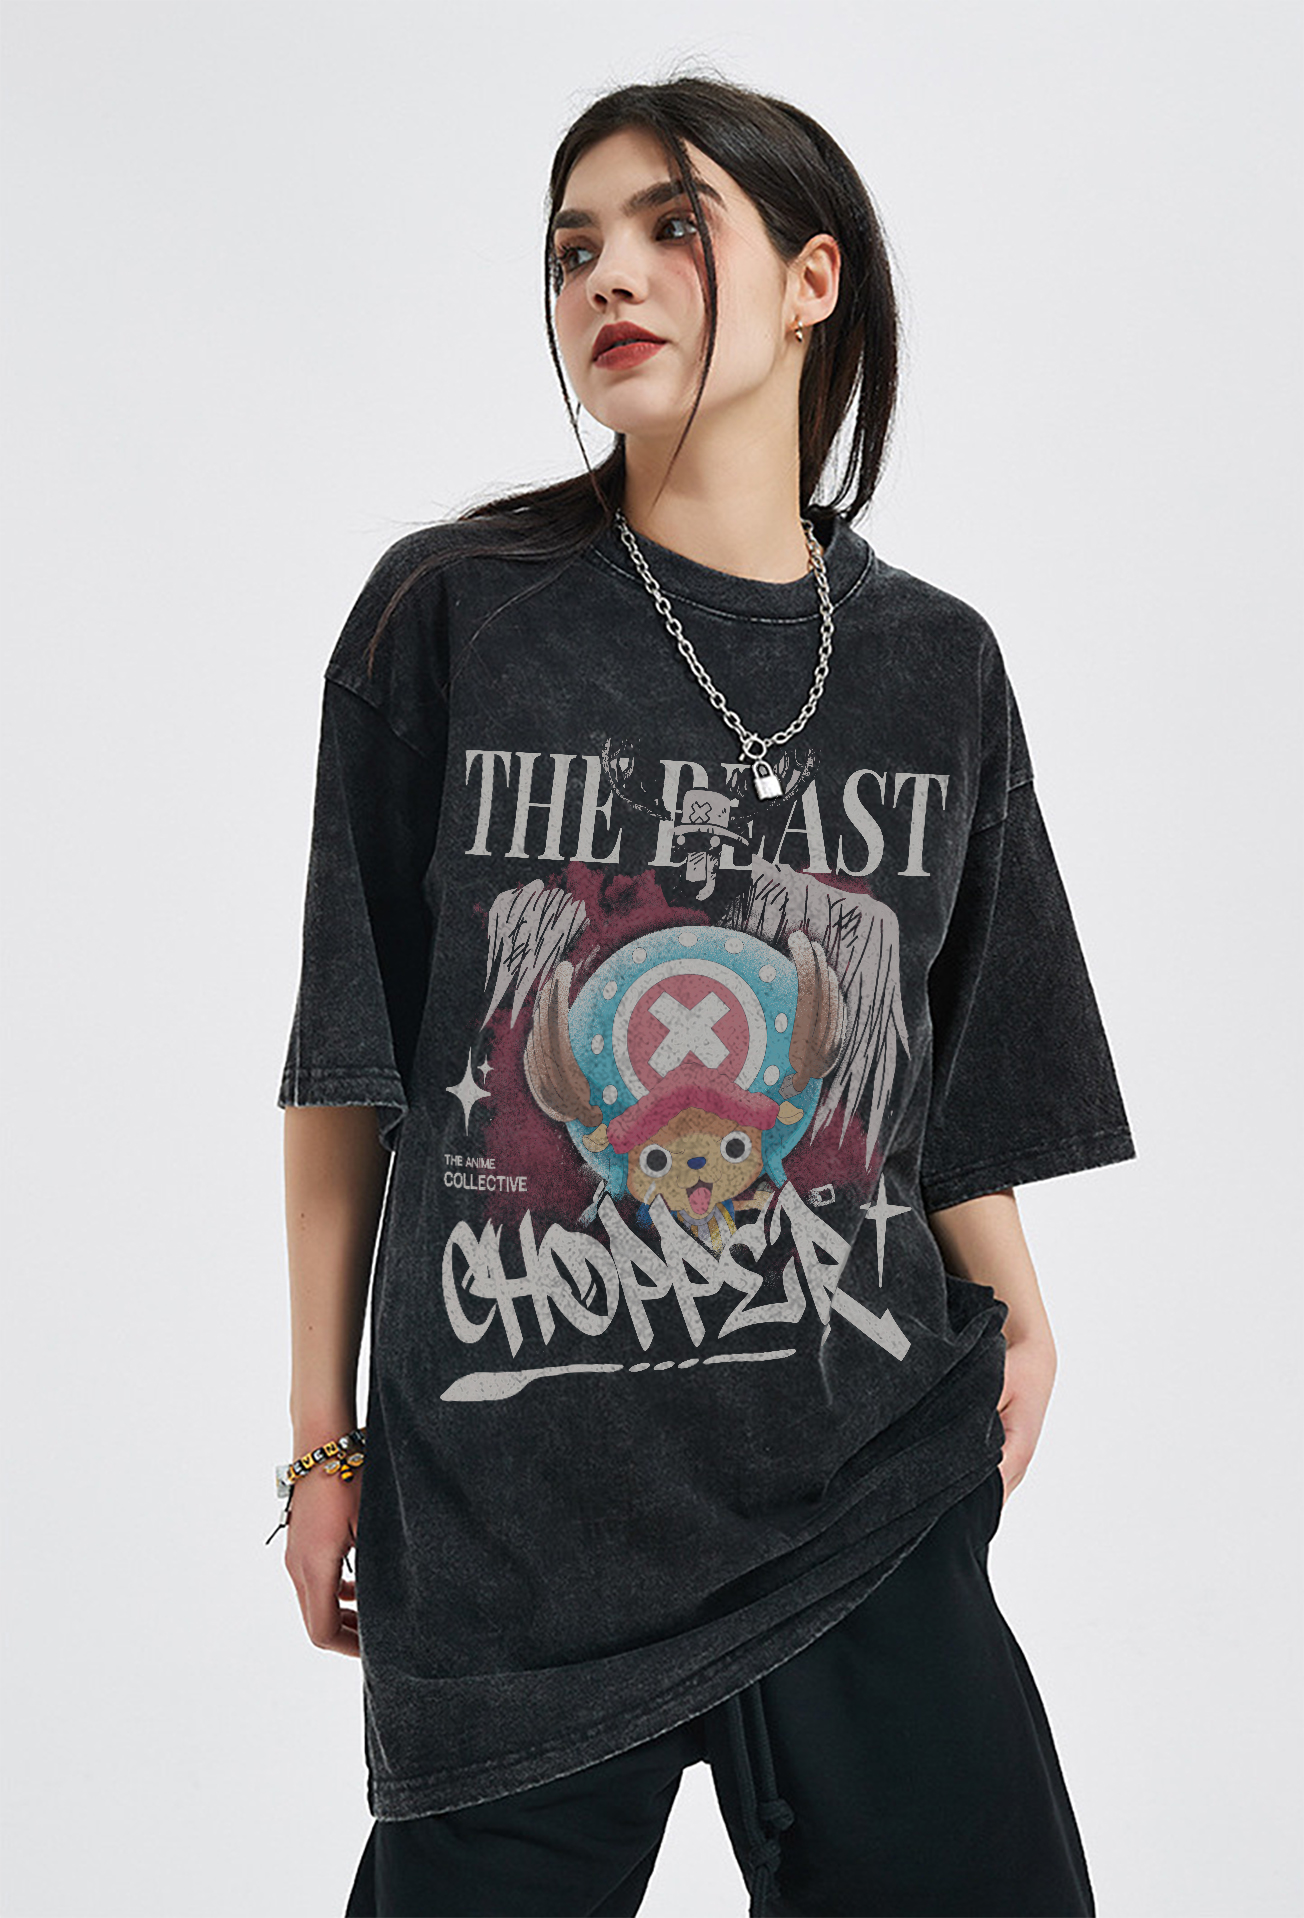 sanji T-shirt 100% cotton oversized Onepiece anime T-shirts – Veenshi